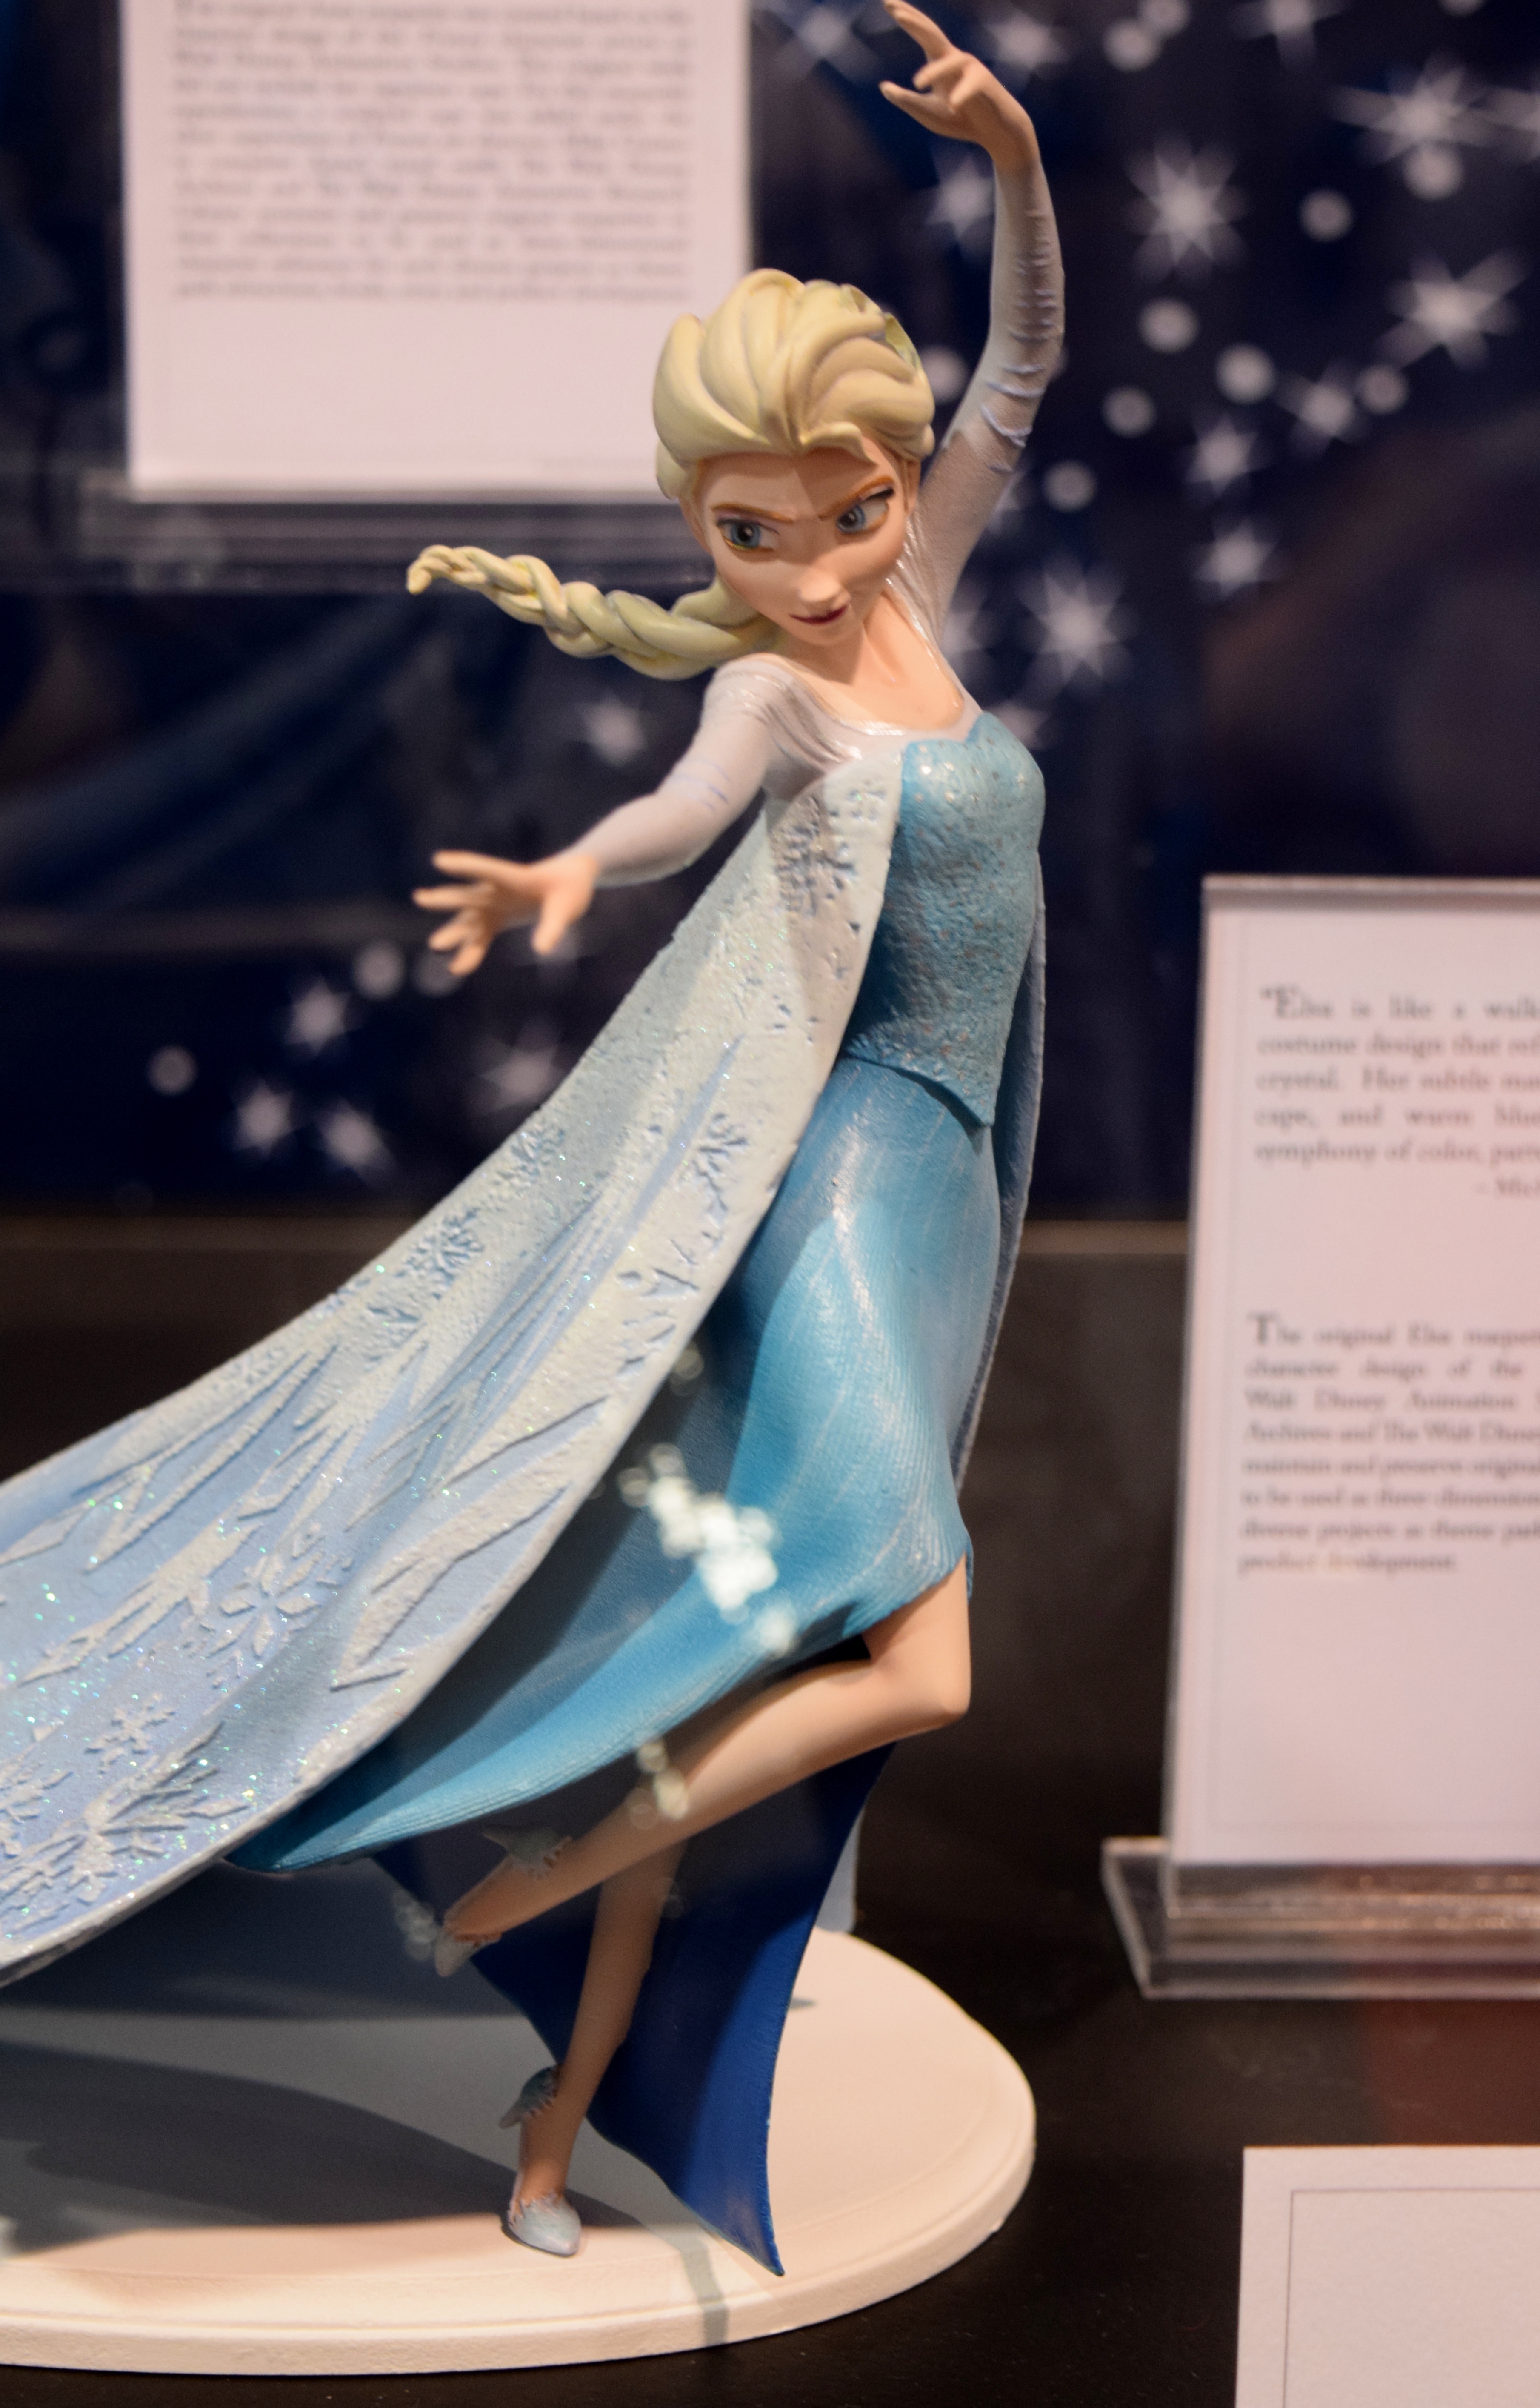 Figurines - Figurines des personnages de "Frozen". - Page 4 20507358228_1ebe30b22b_o